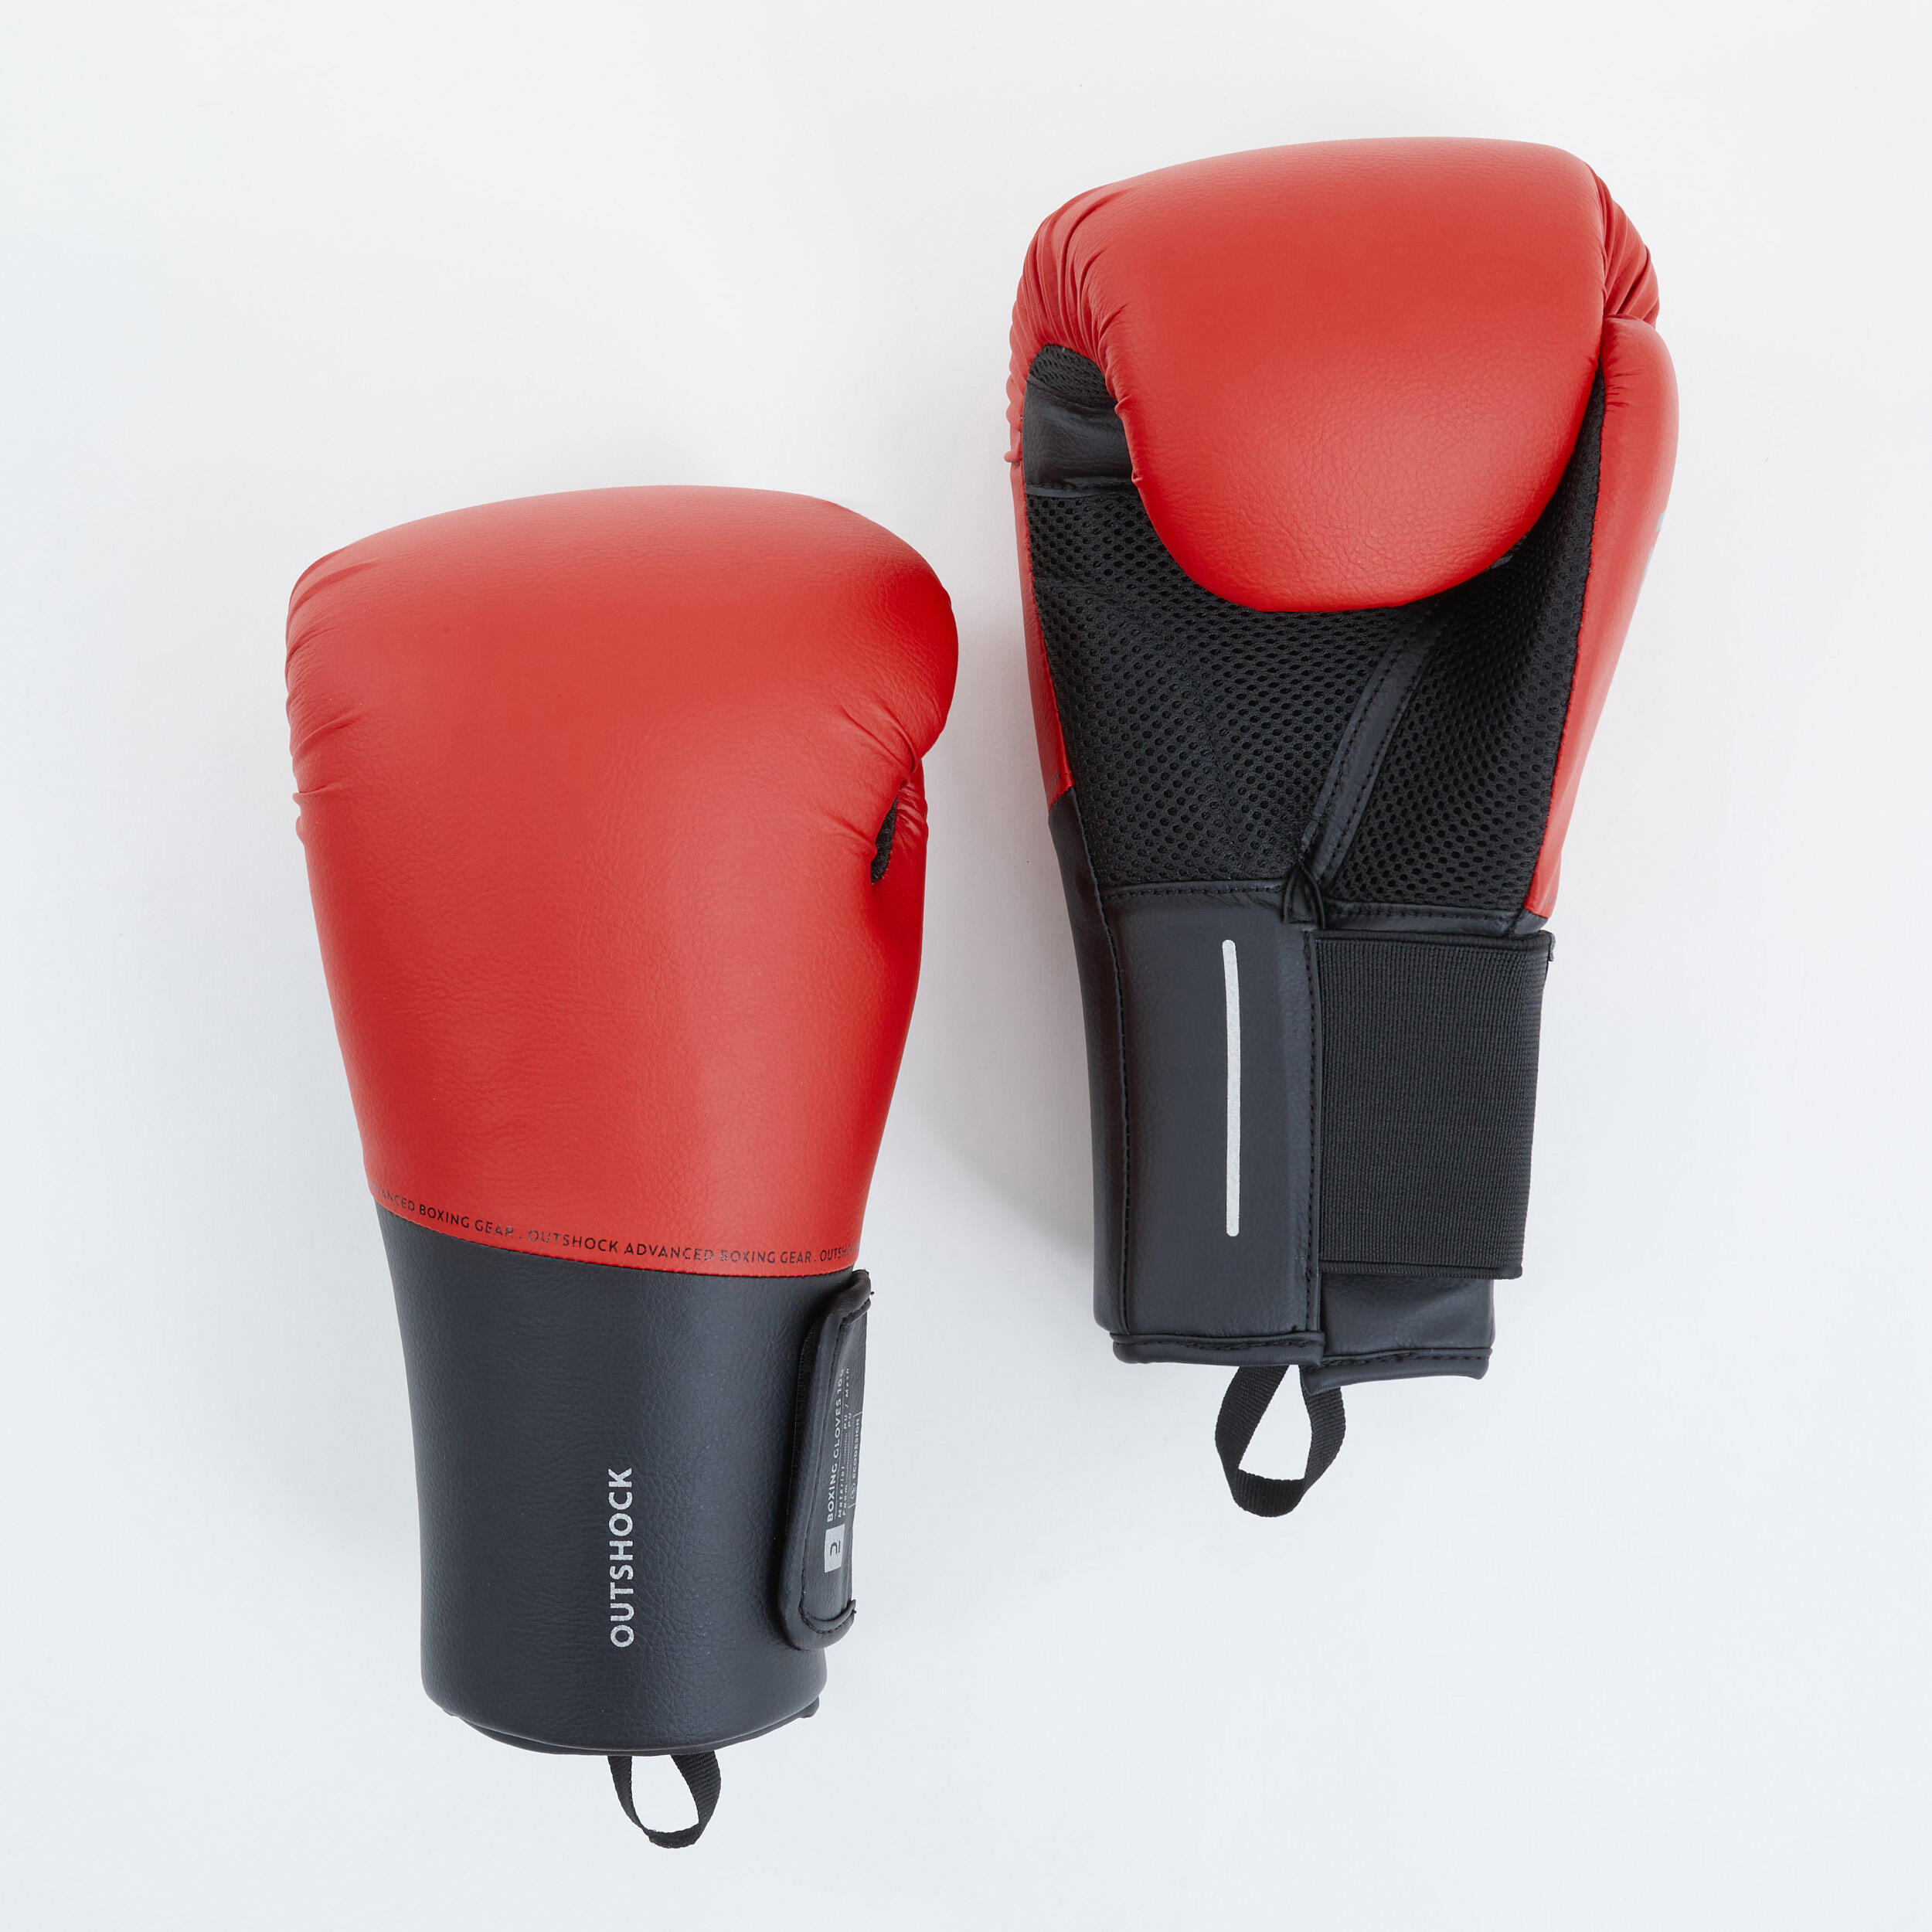 Zafco Boxing Gloves for Men & Women Training Pro Punching Heavy Bag Mitts MMA Muay Thai Sparring Kickboxing Gloves 